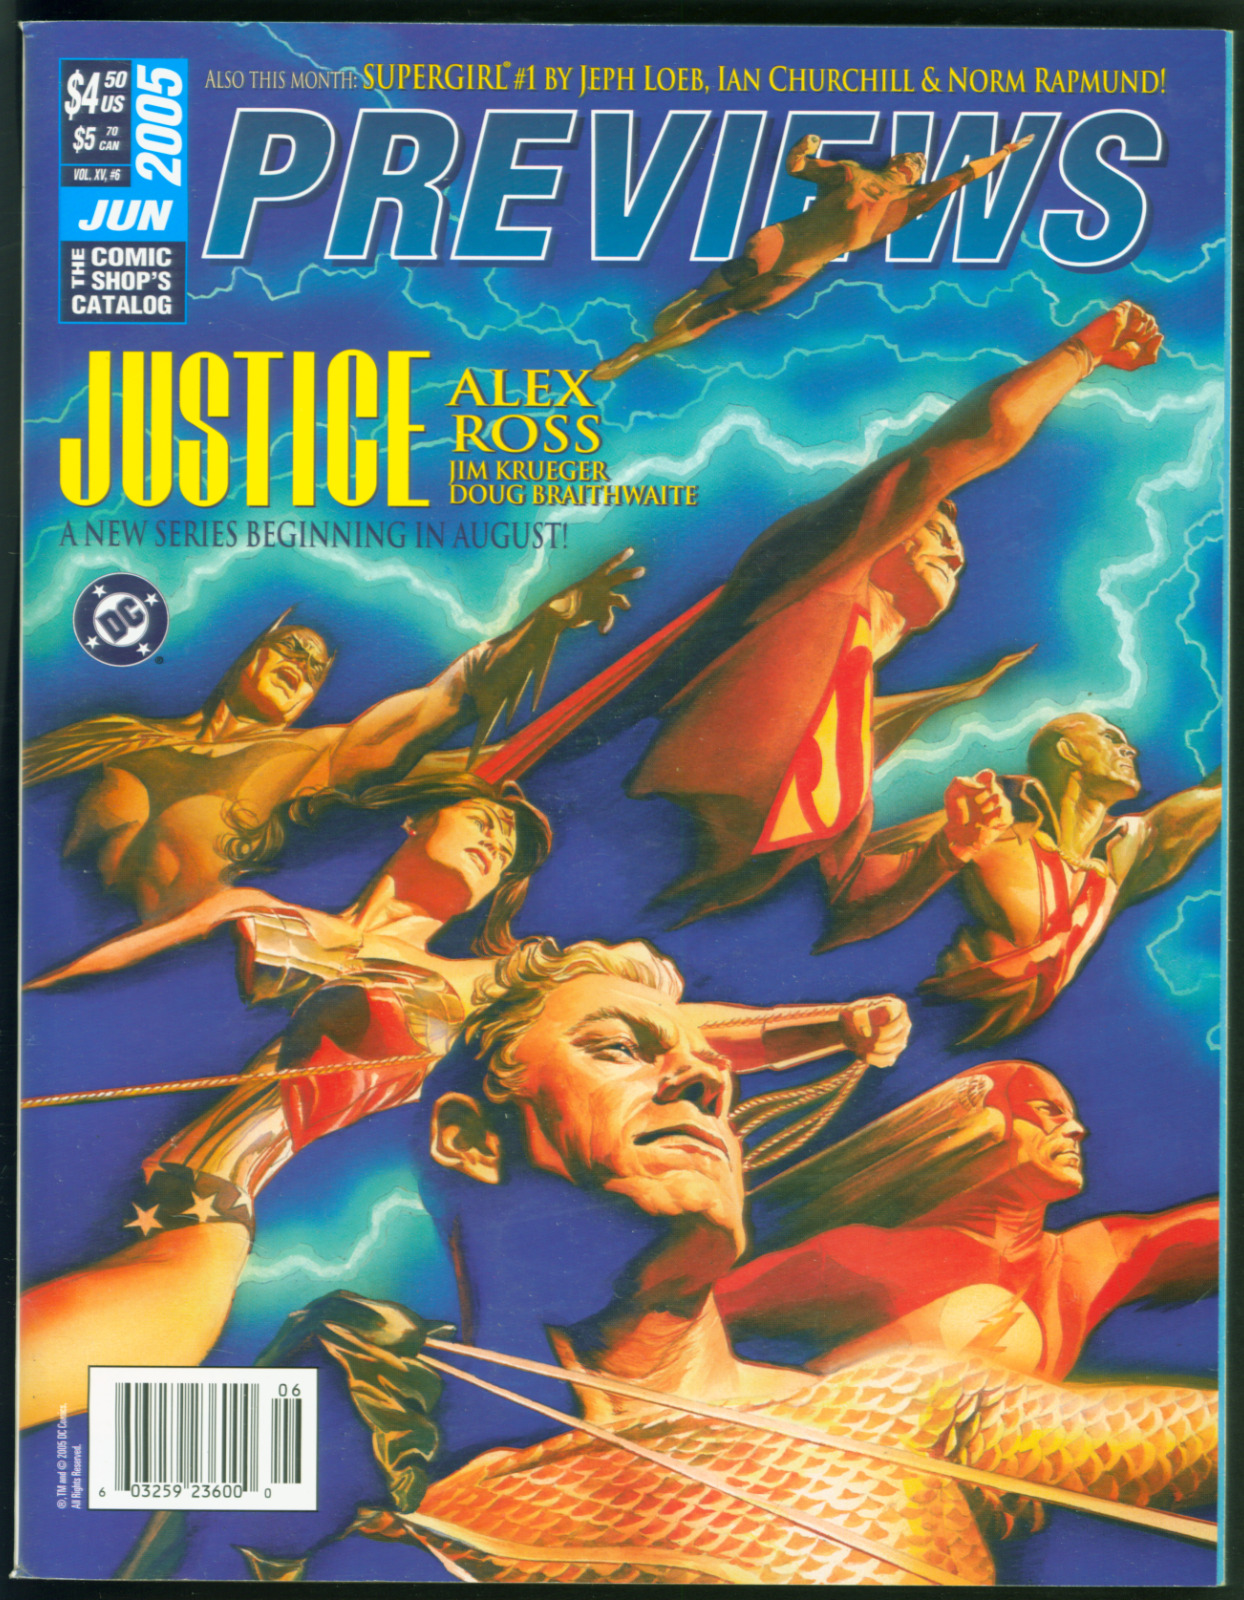 June 2005 Diamond Comics Previews Catalog DC Comics Alex Ross Justice League CVR